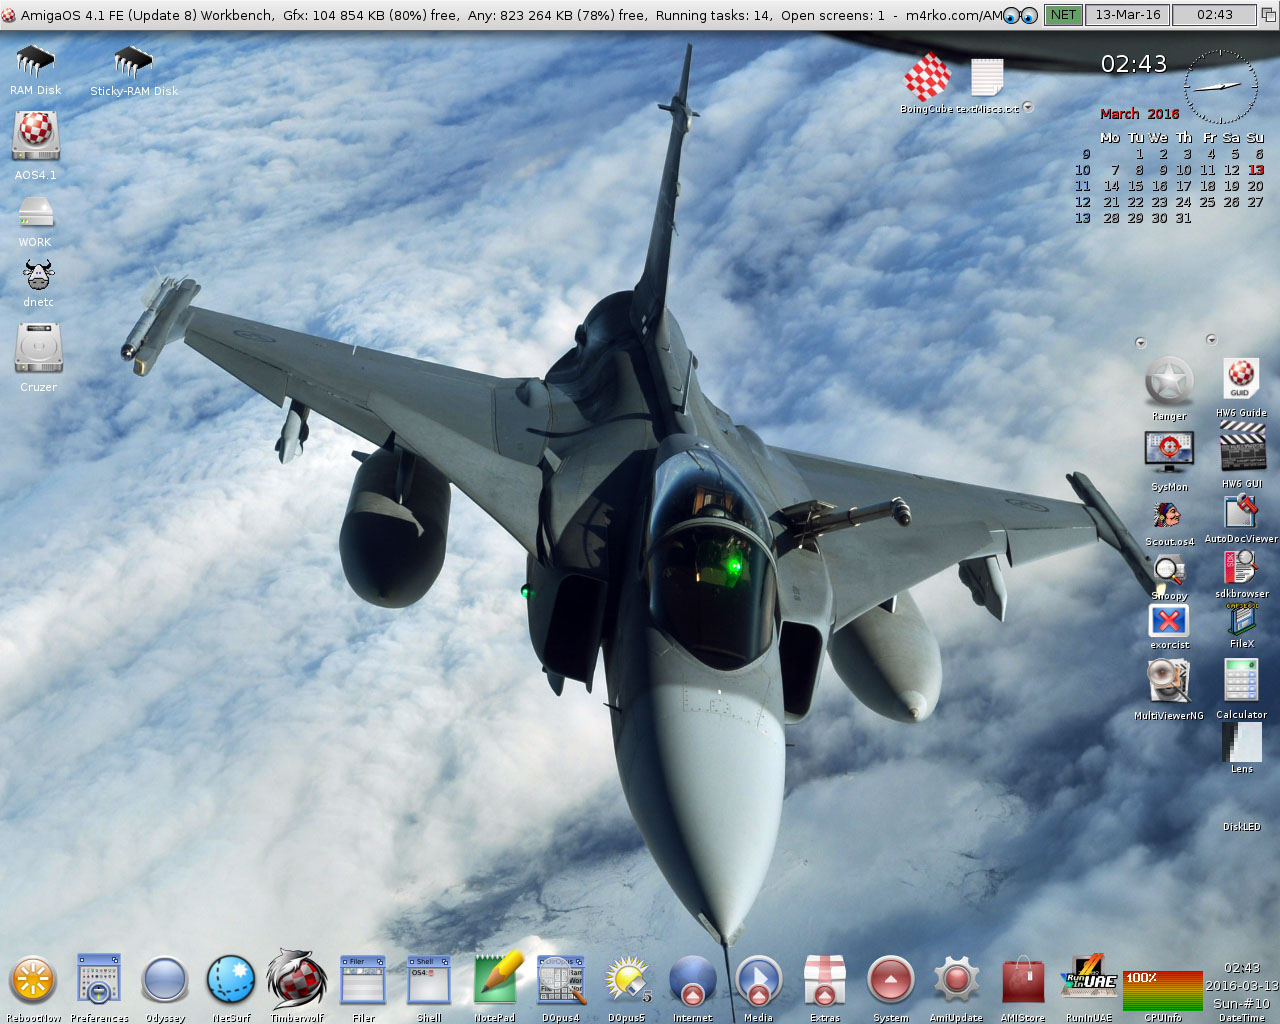 AmigaOS 4.1 FE Workbench with JAS 39 Gripen backdrop